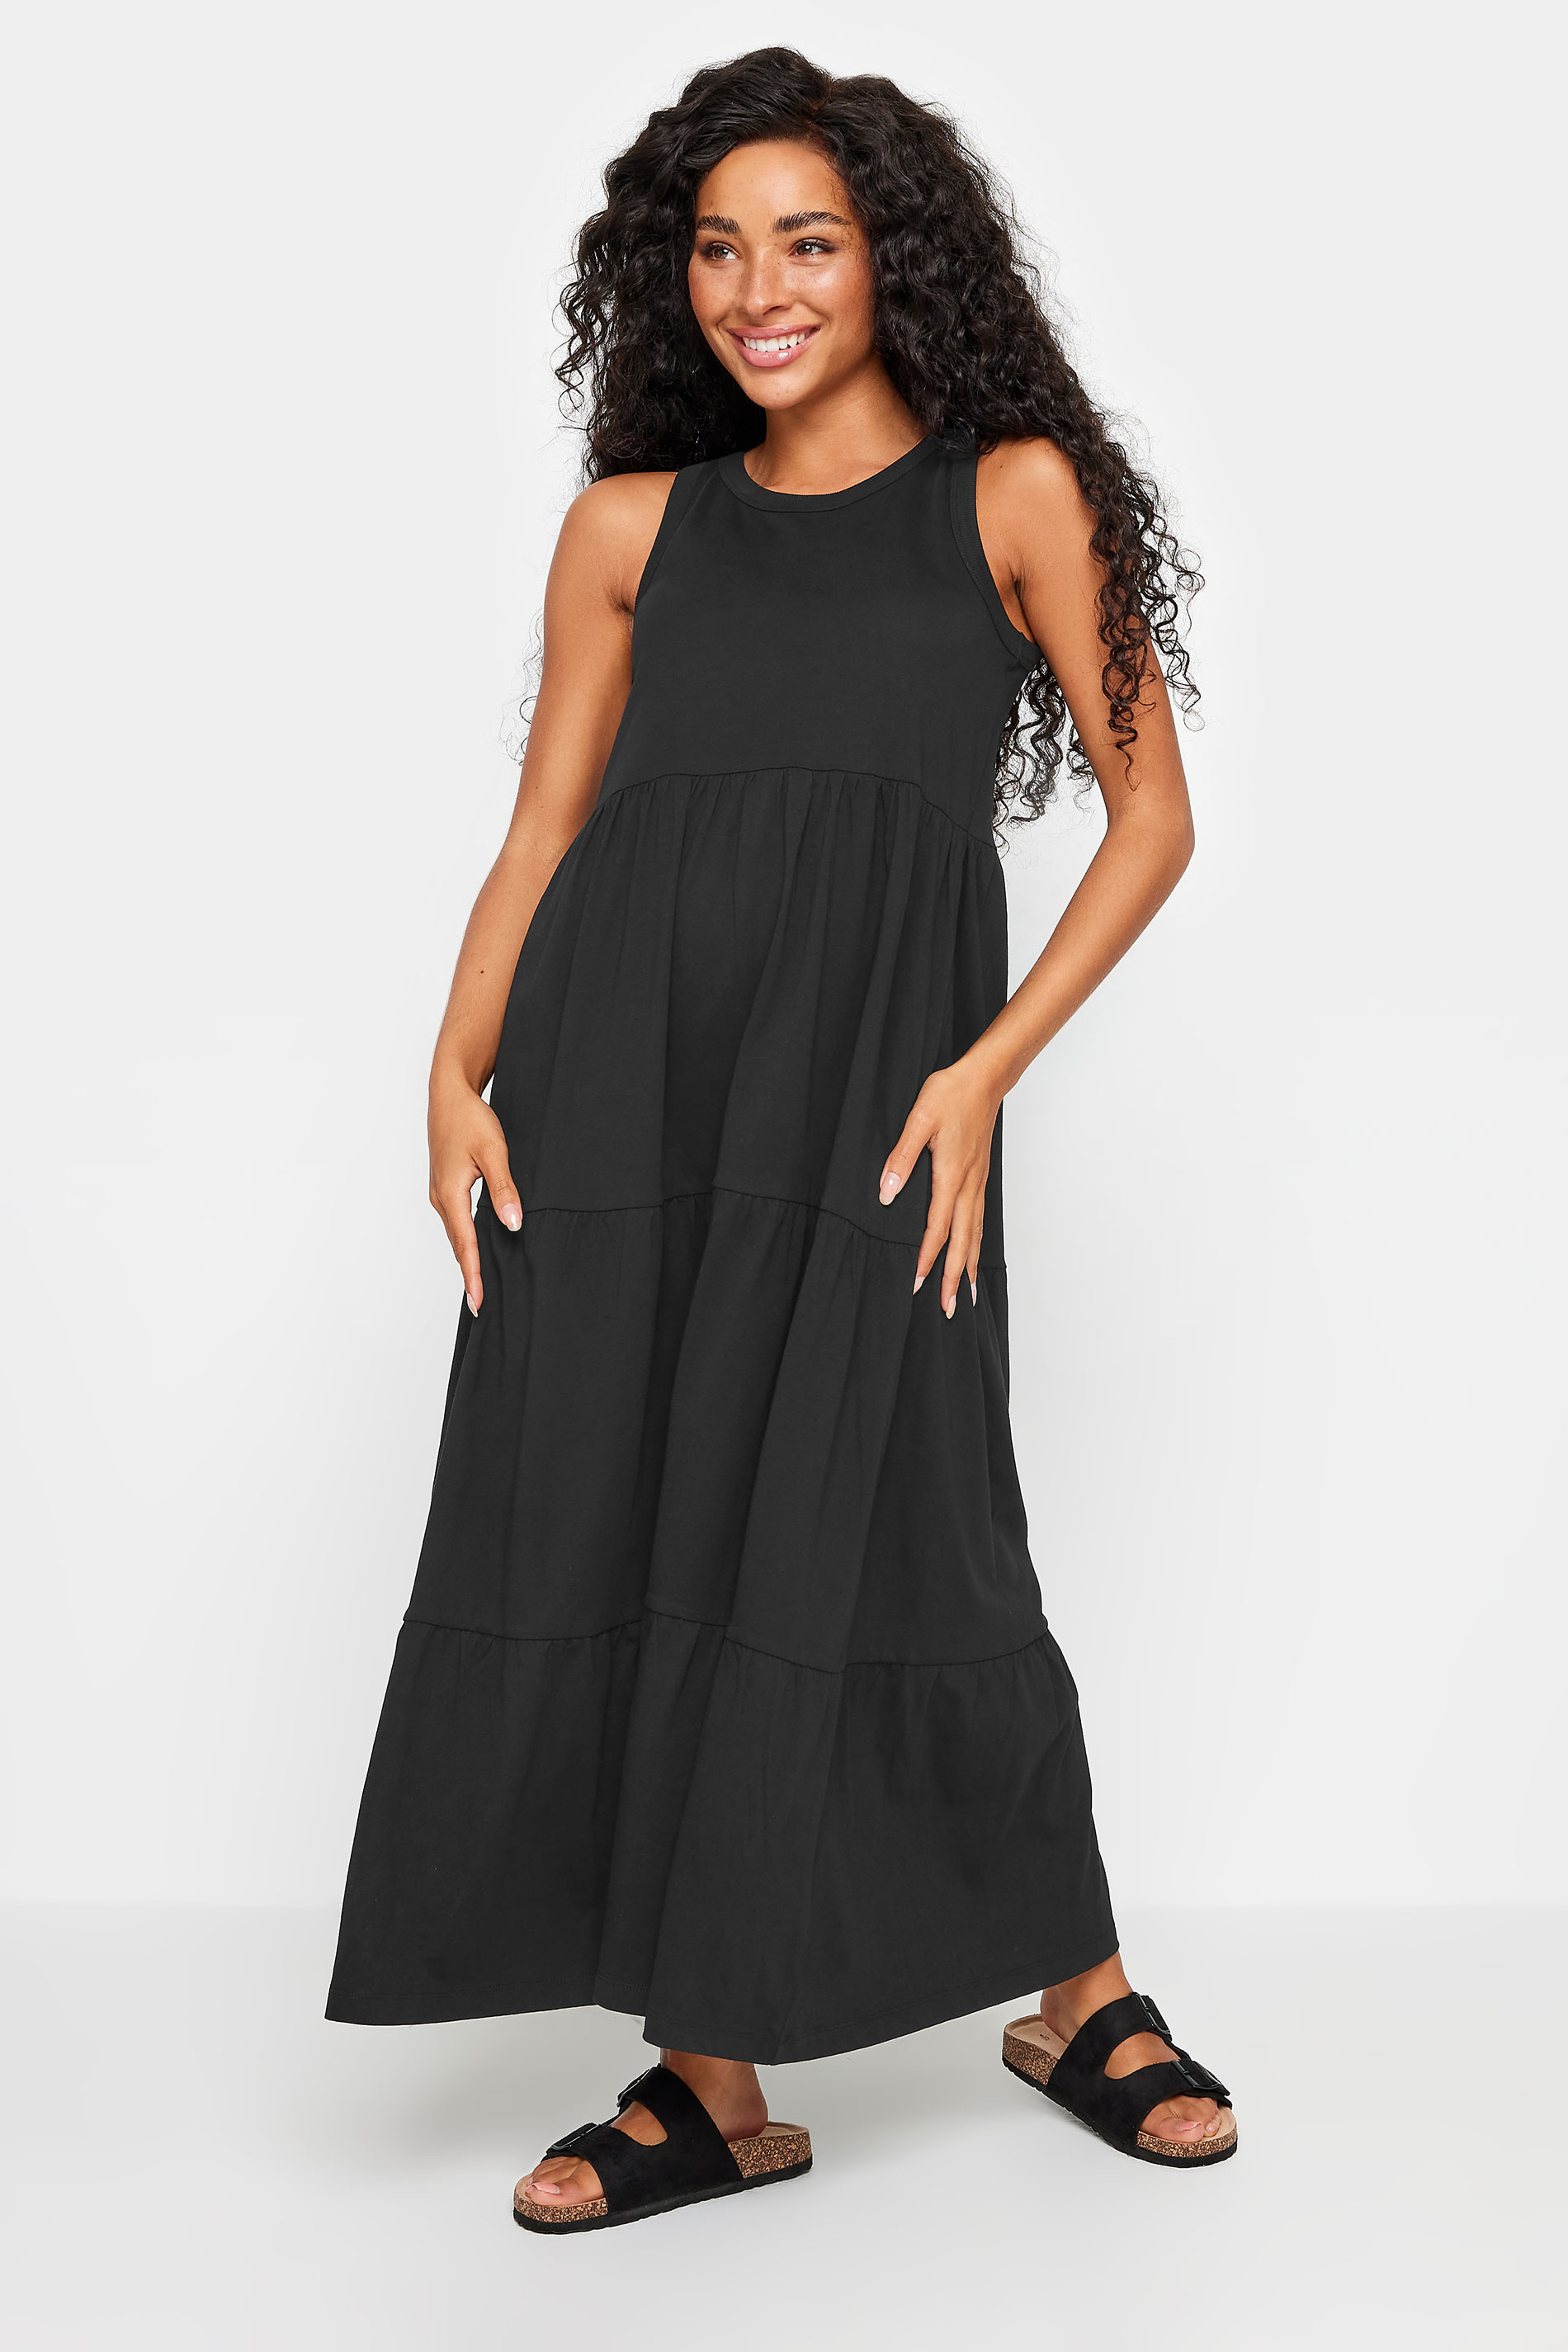 M&Co Petite Black Sleeveless Tiered Maxi Dress | M&Co 2